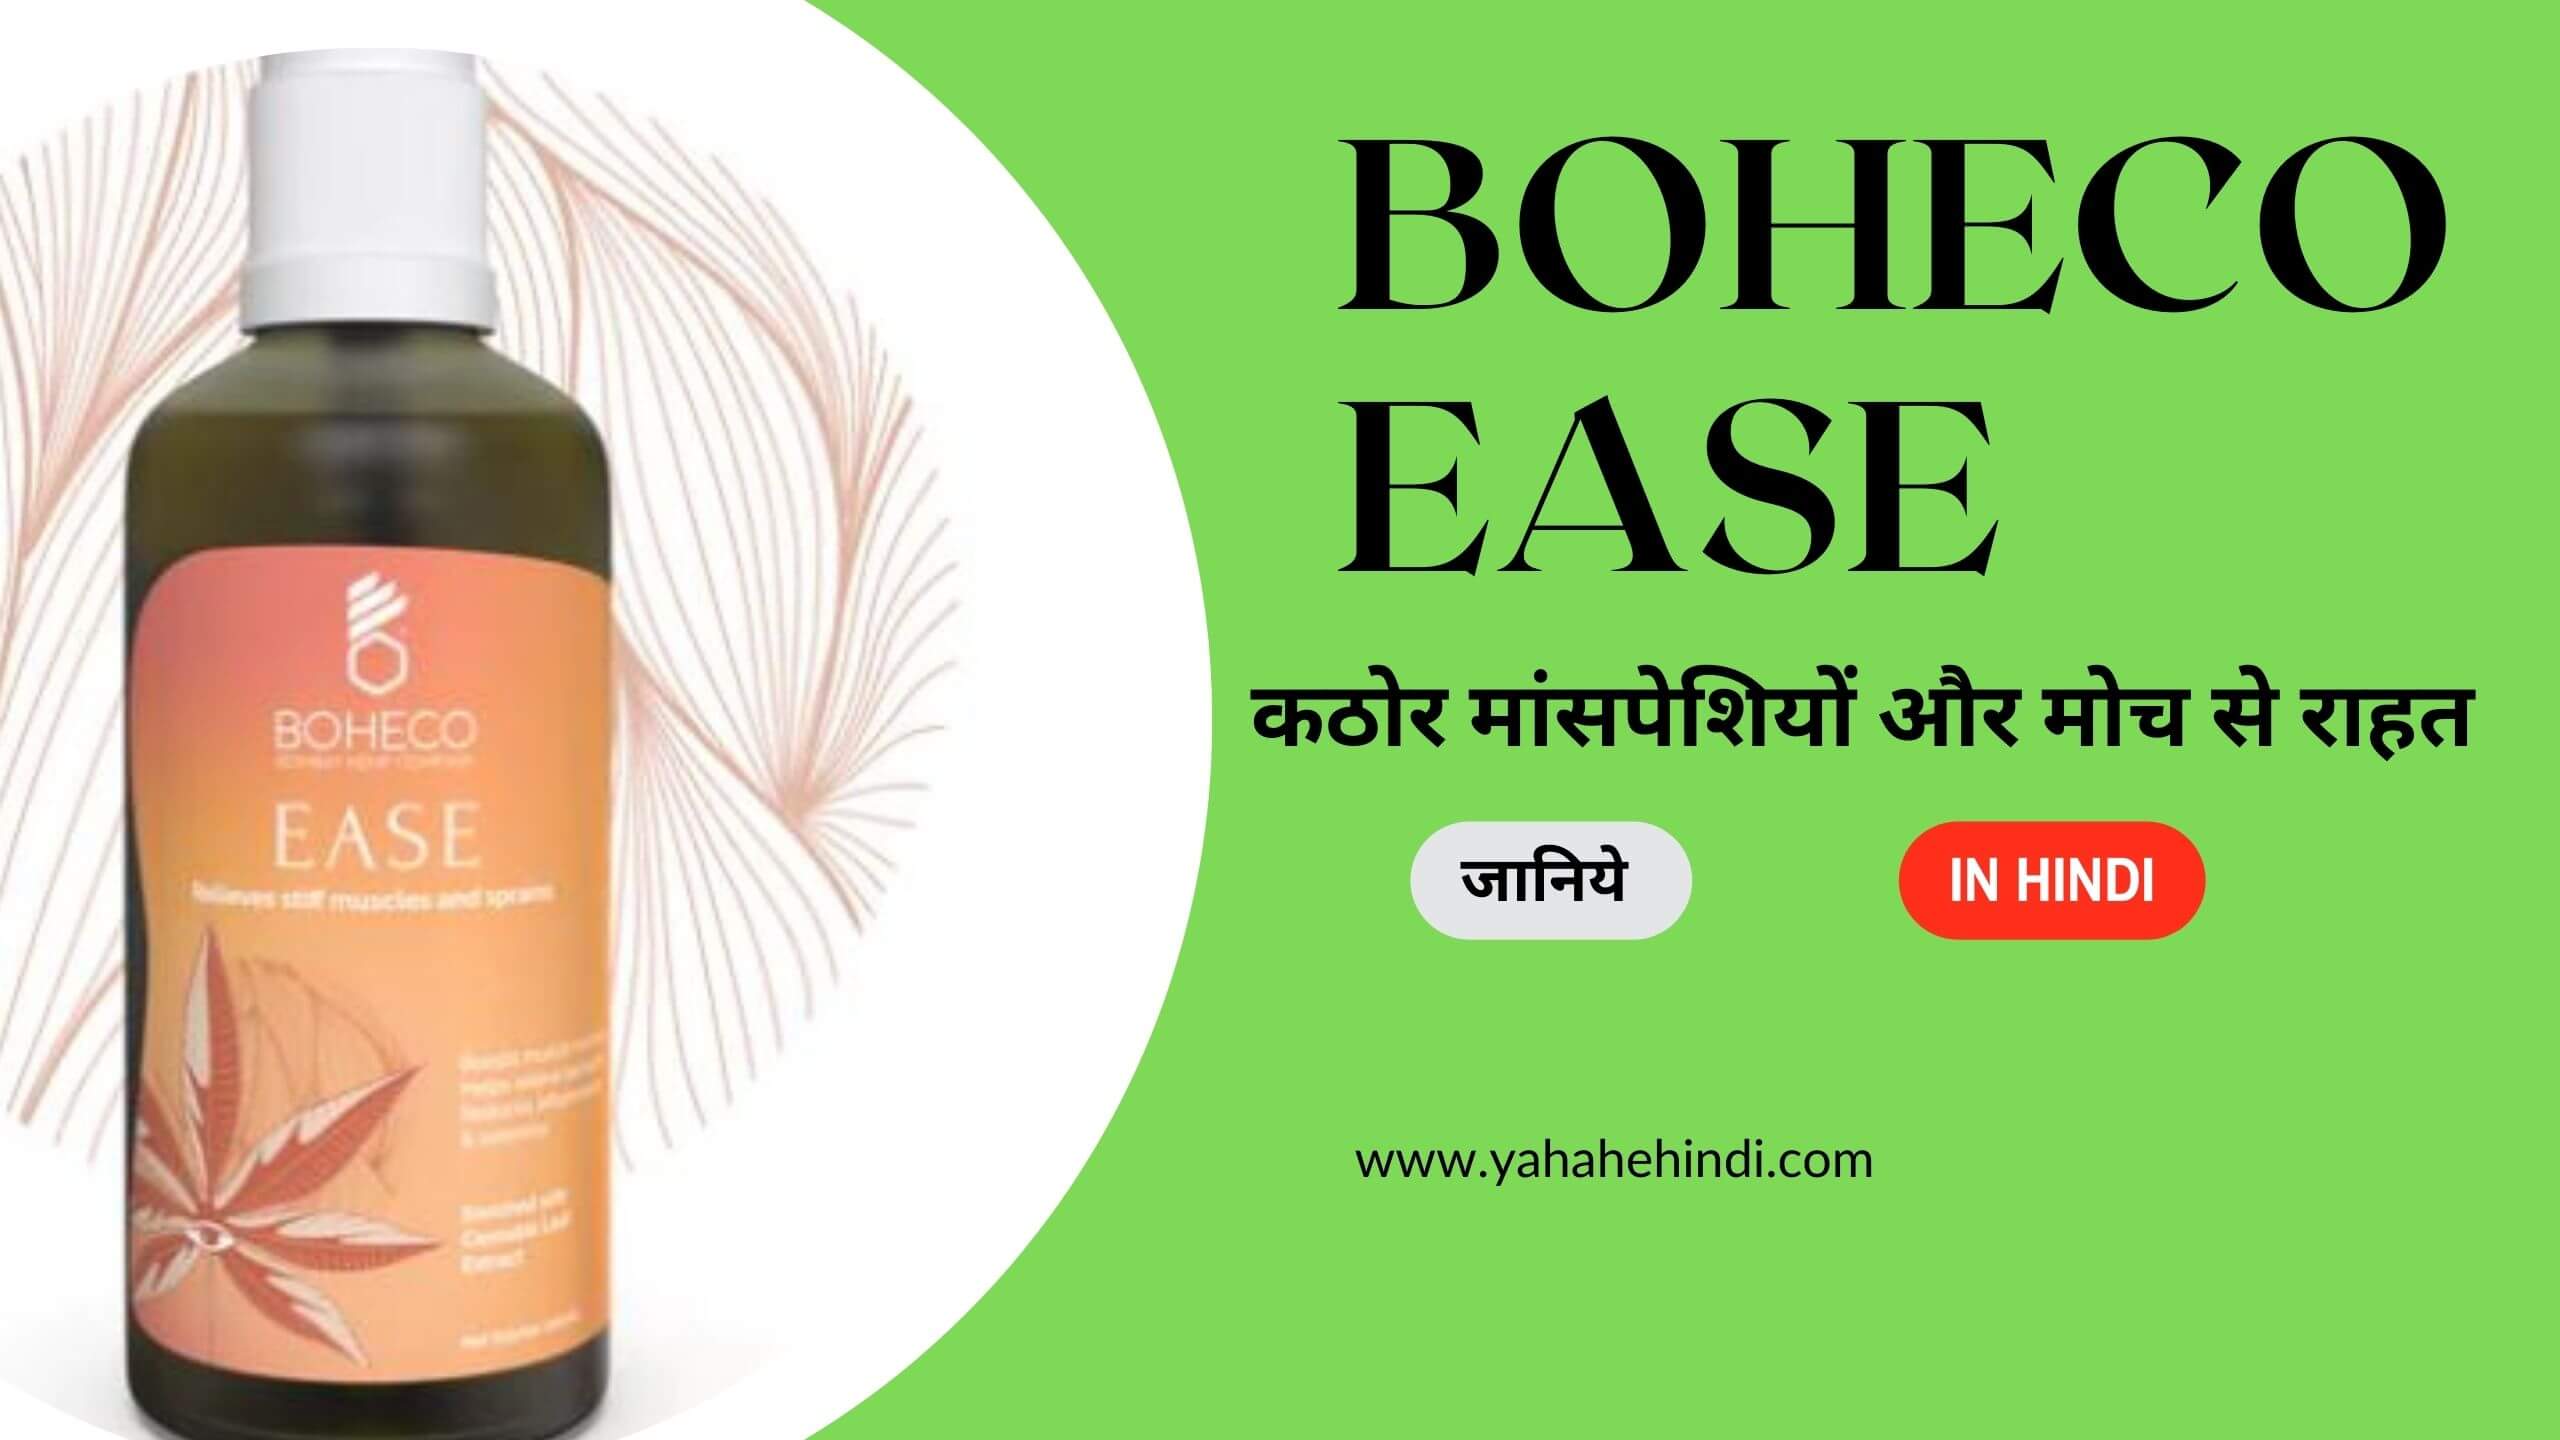 Boheco Ease in Hindi